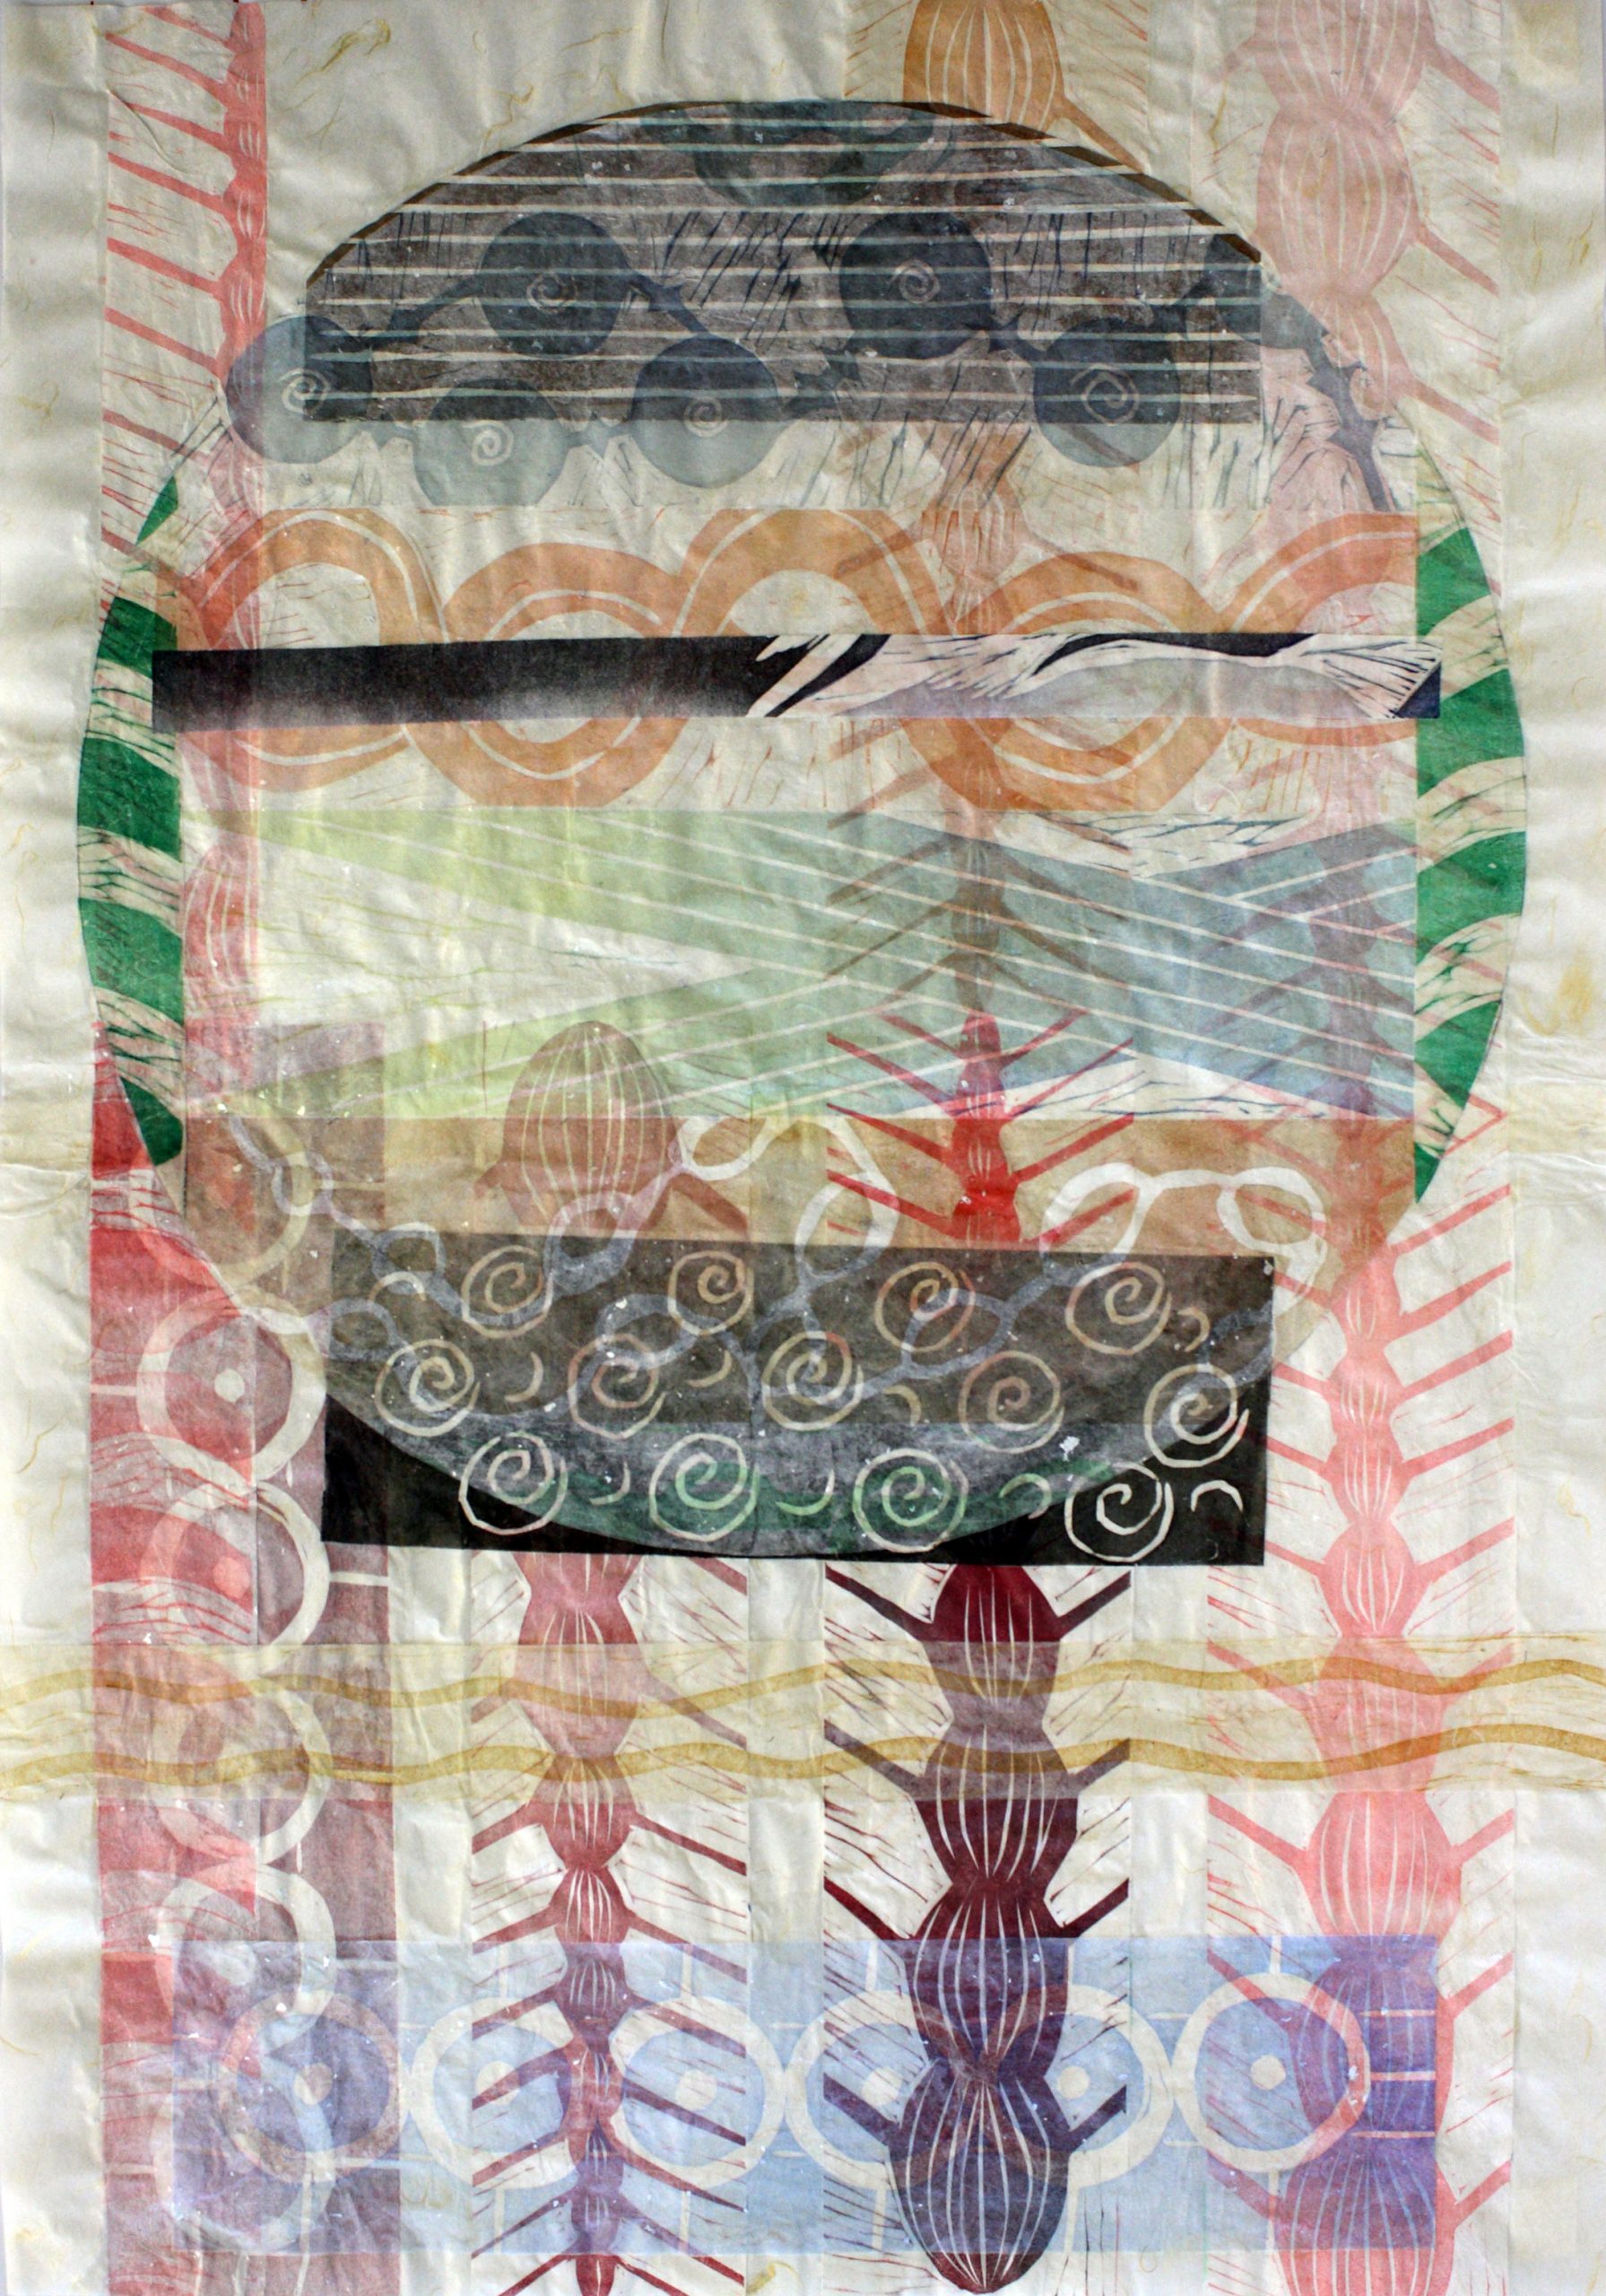 Metsä/ The Forest, 2022, kohopaino, kollaasi/relief print, collage, 91 x 64 cm